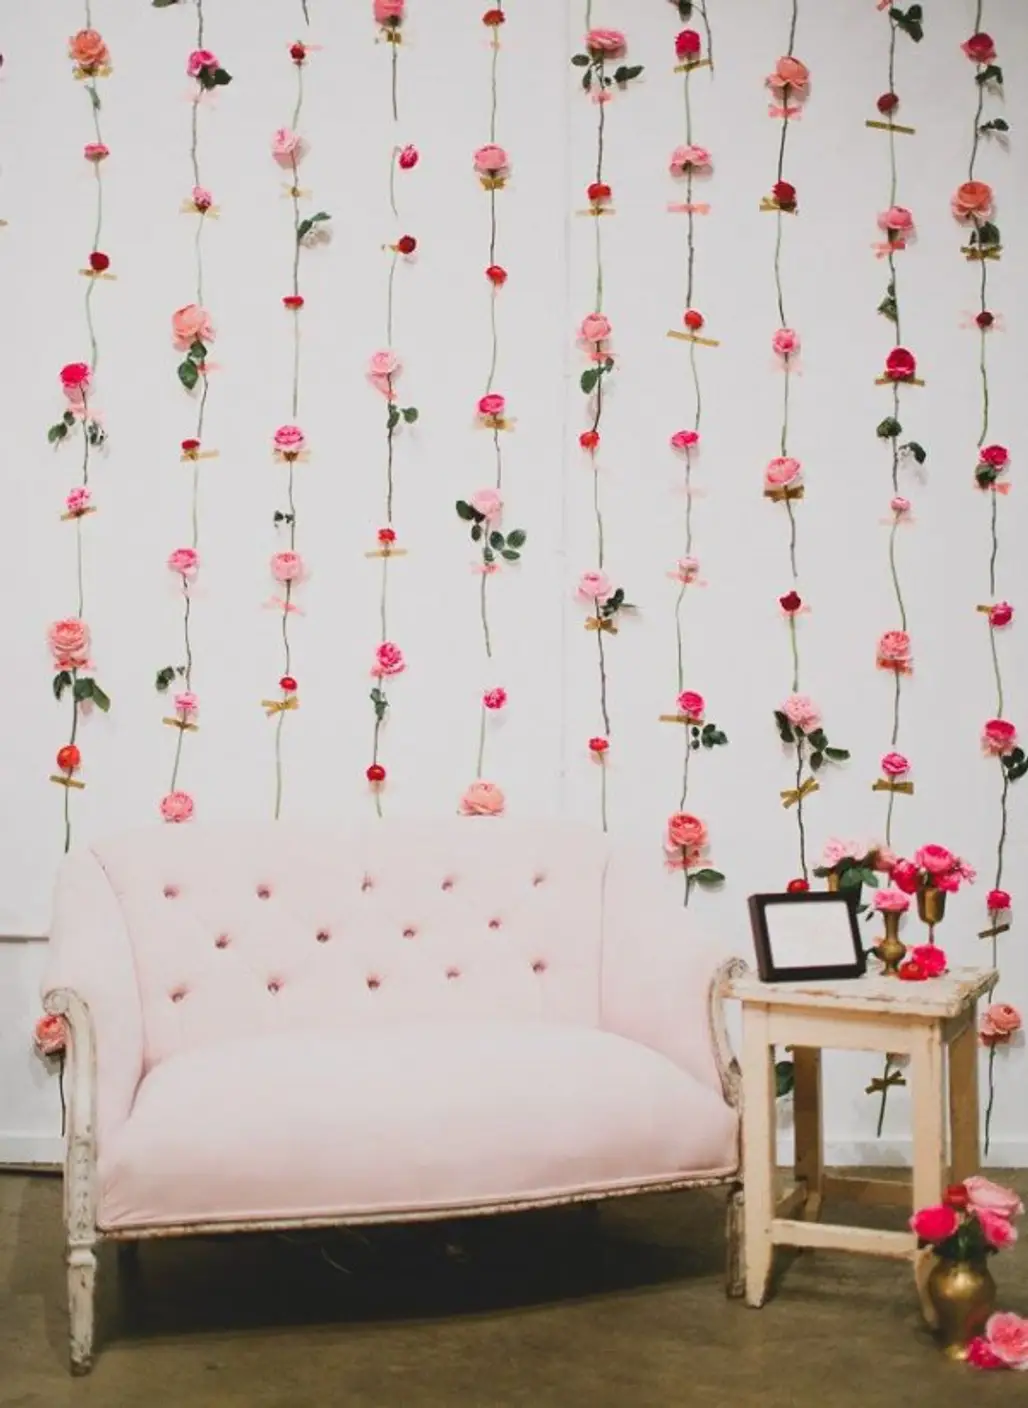 DIY Fresh Flower Wall for a Stunning Backdrop